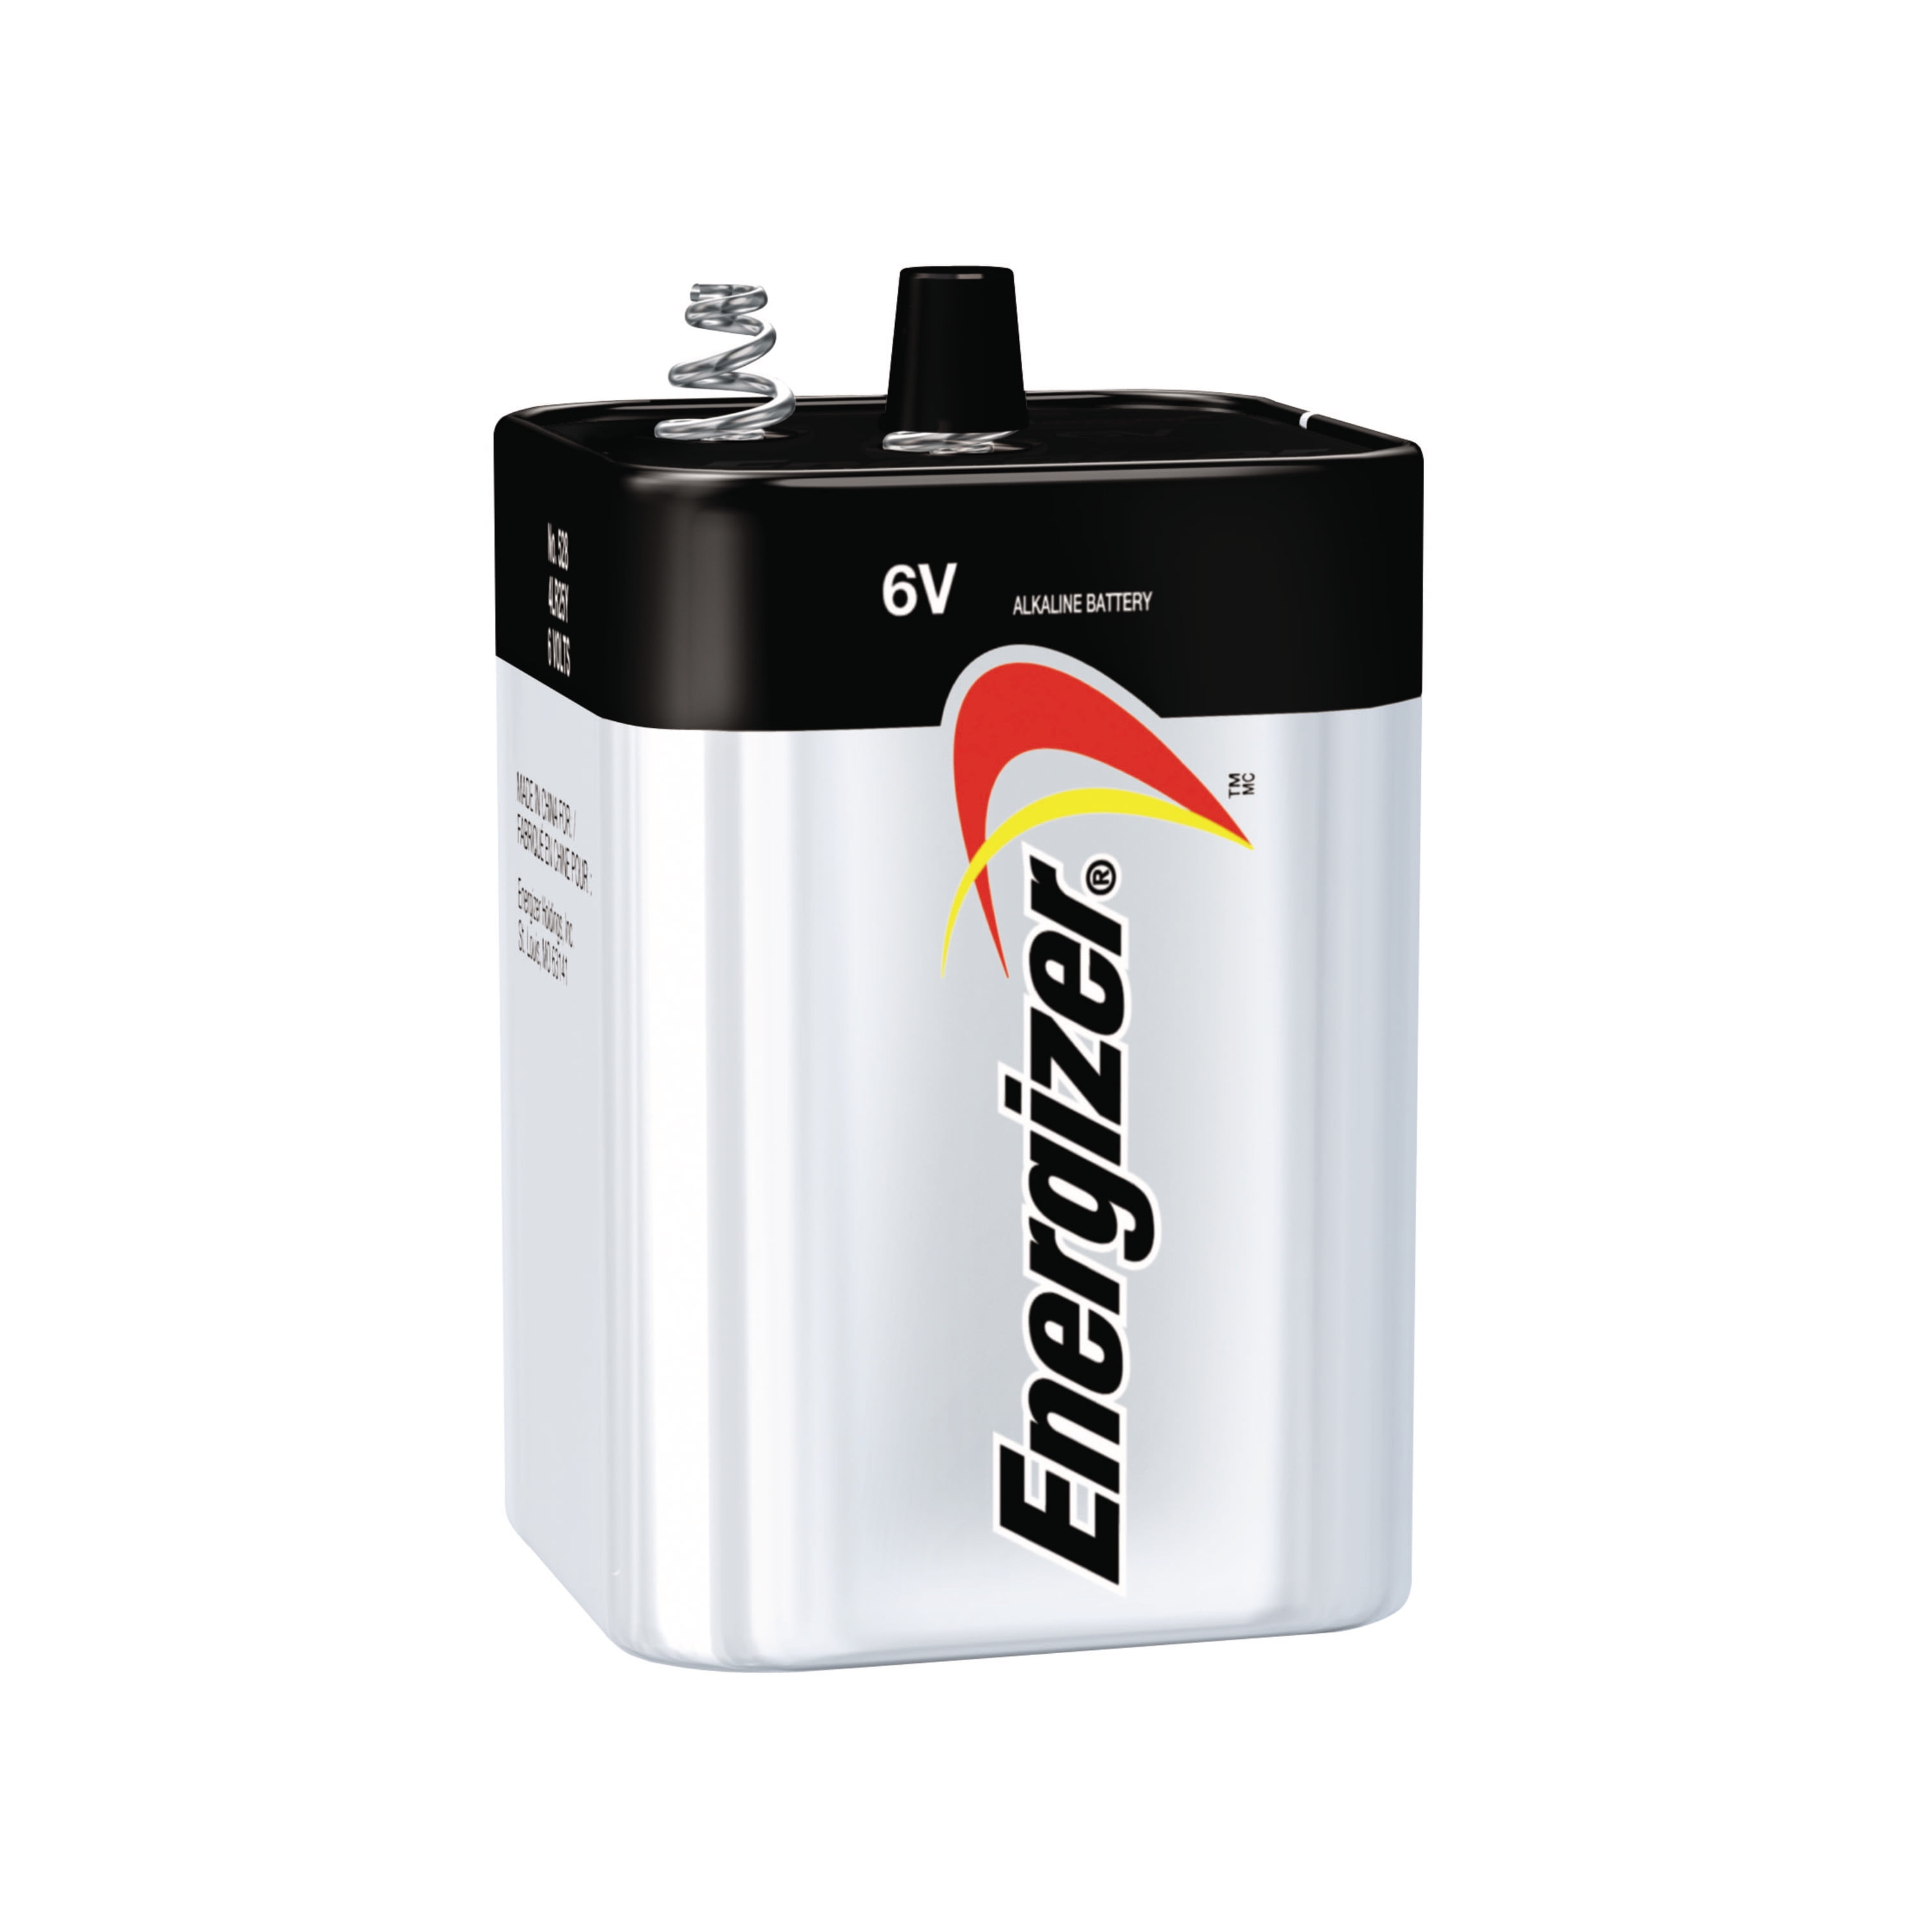 Energizer Max 529 Alkaline Spring Terminal Lantern Battery, 6V -